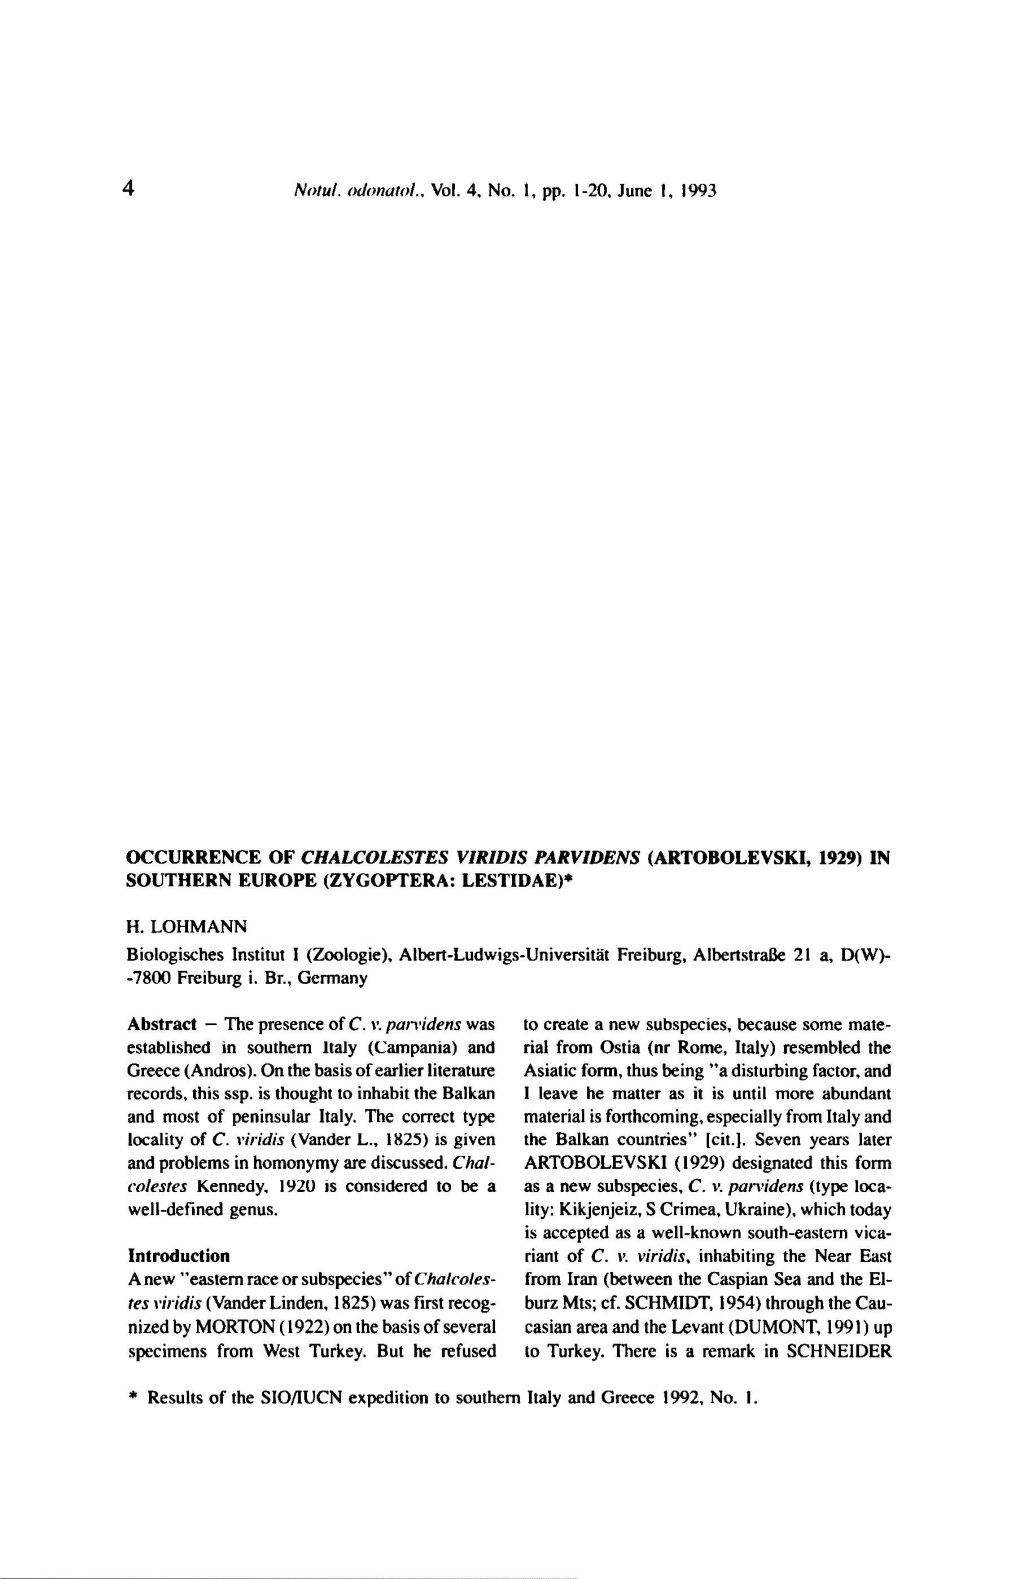 Occurrence of Chalcolestes Viridis Parvidens (Artobolevski, 1929) in Southern Europe (Zygoptera:)* Lestidae)